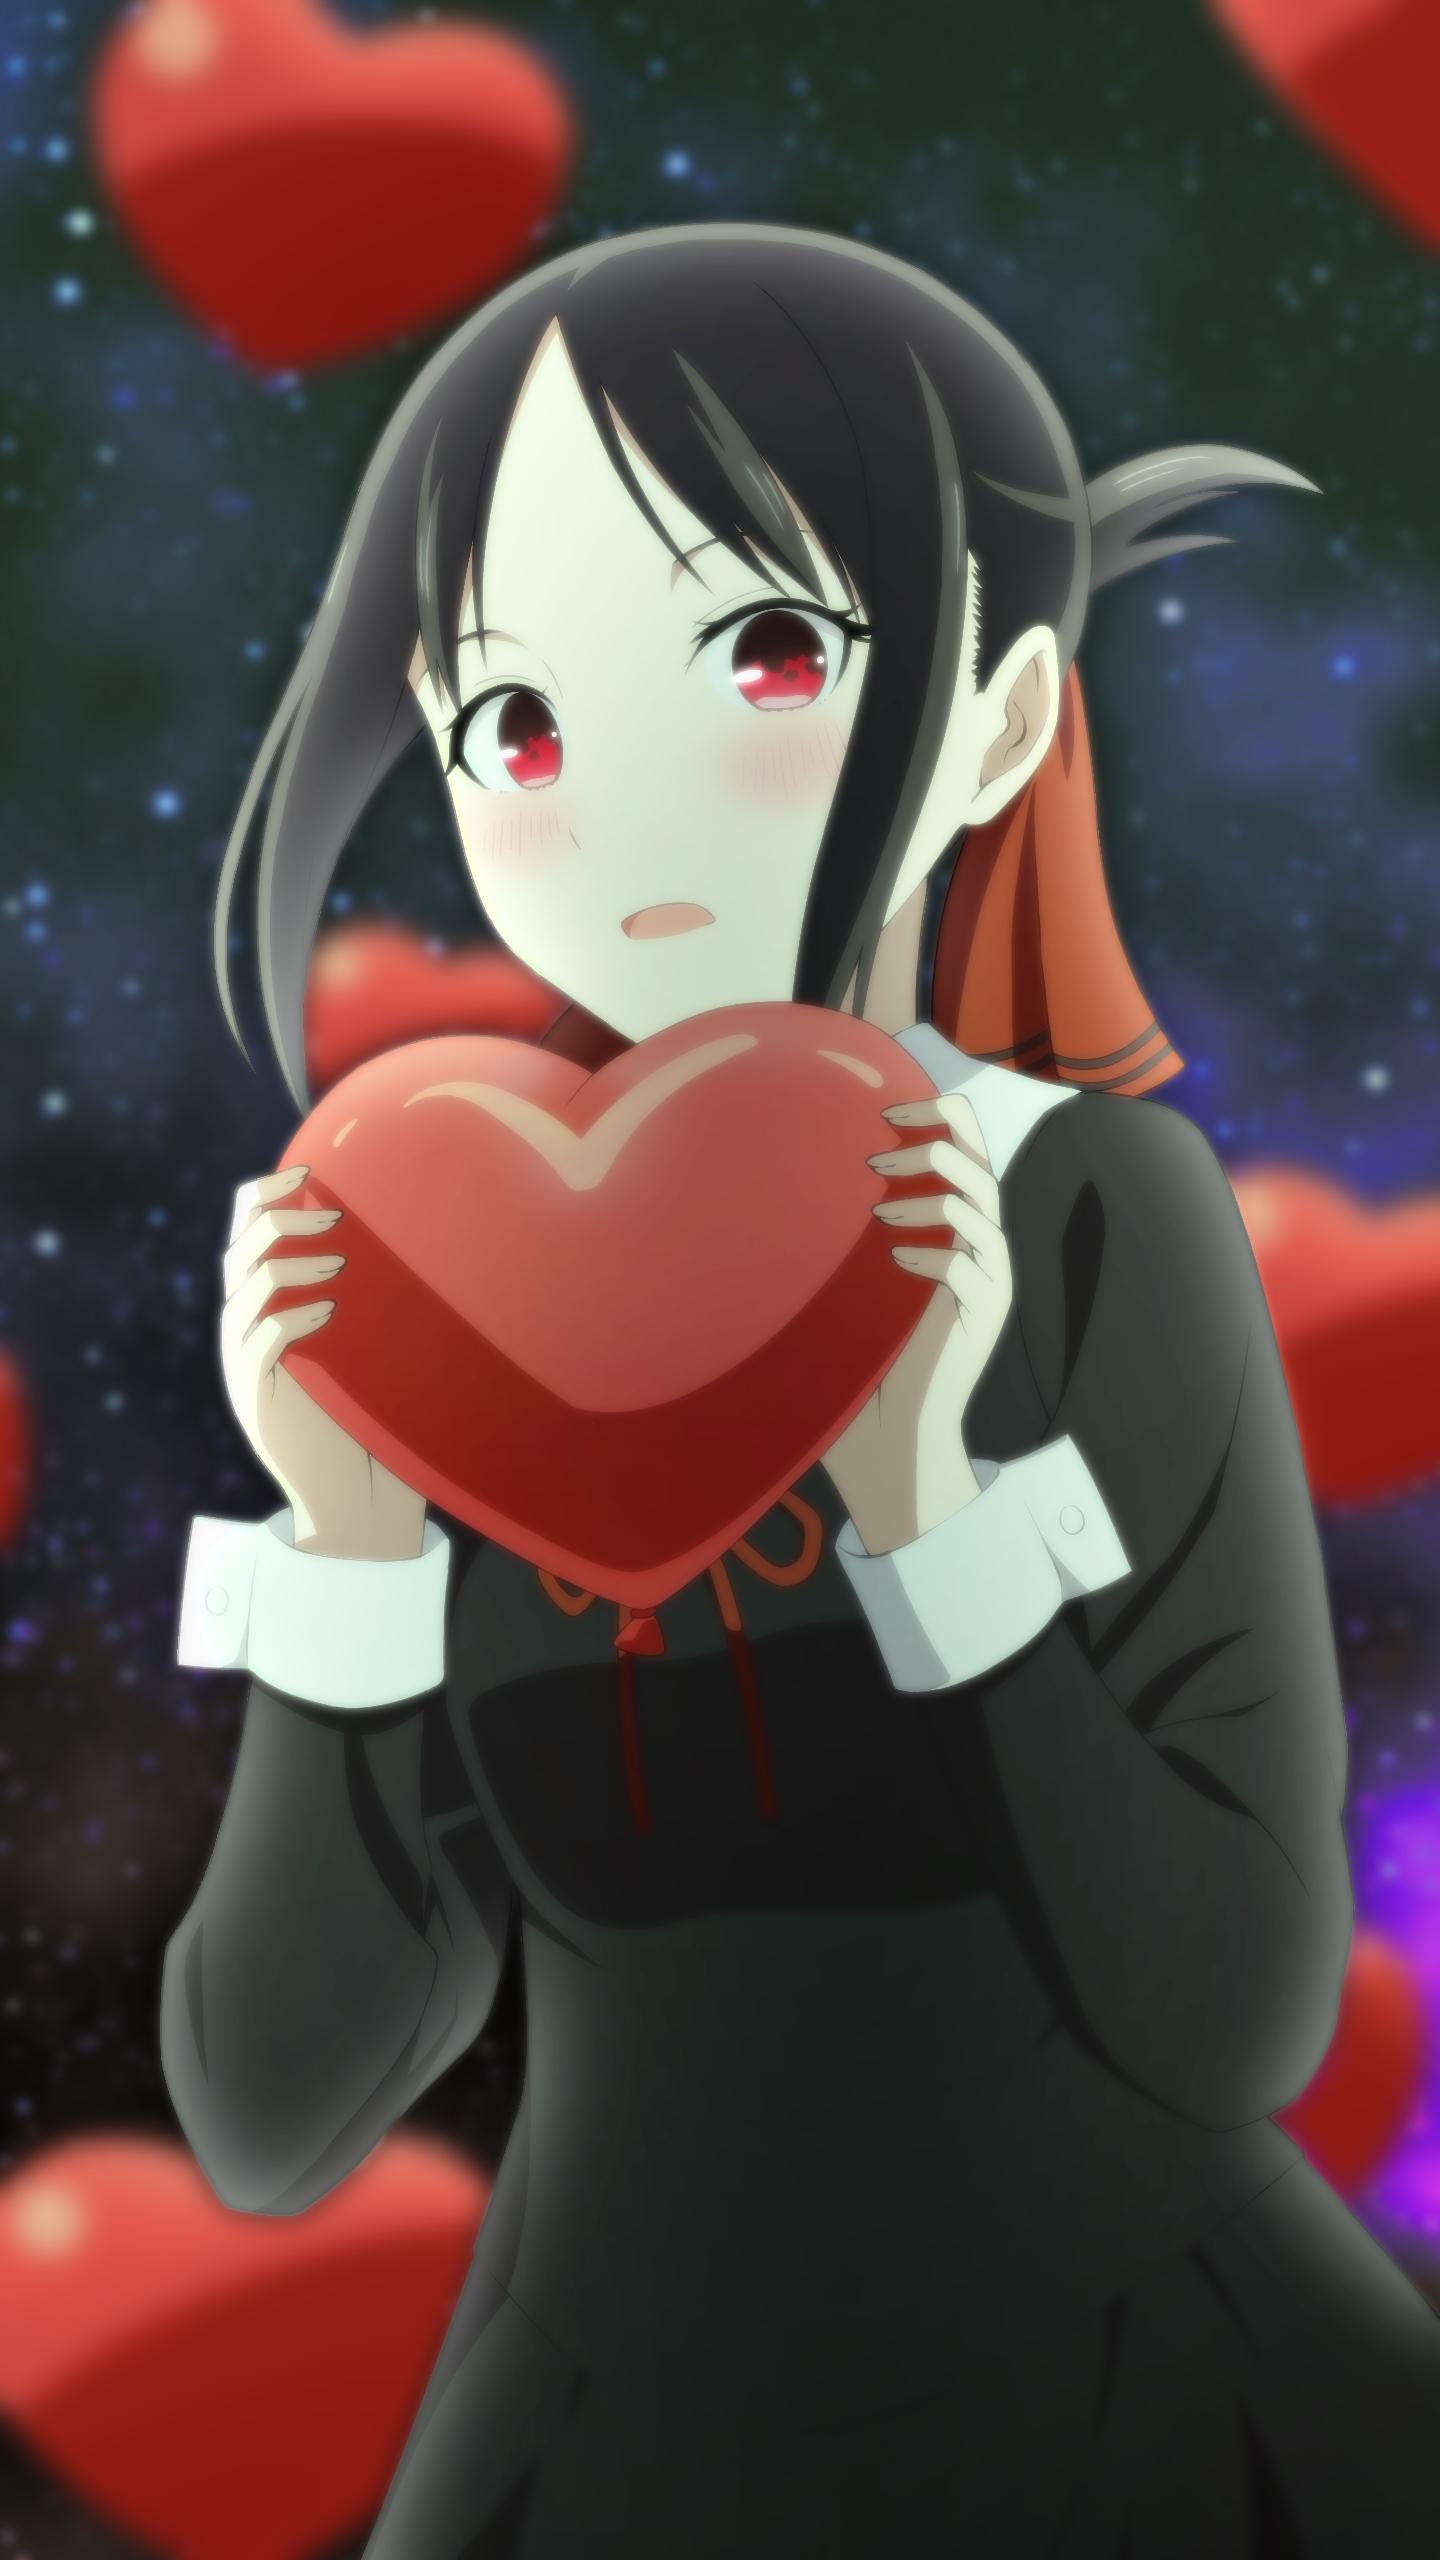 Kaguya-sama: love is war - ultra romantic”, capítulo 11: revelan primeras  imágenes para el undécimo episodio, Crunchyroll, Anime, Series, Manga, México, Japón, Animes